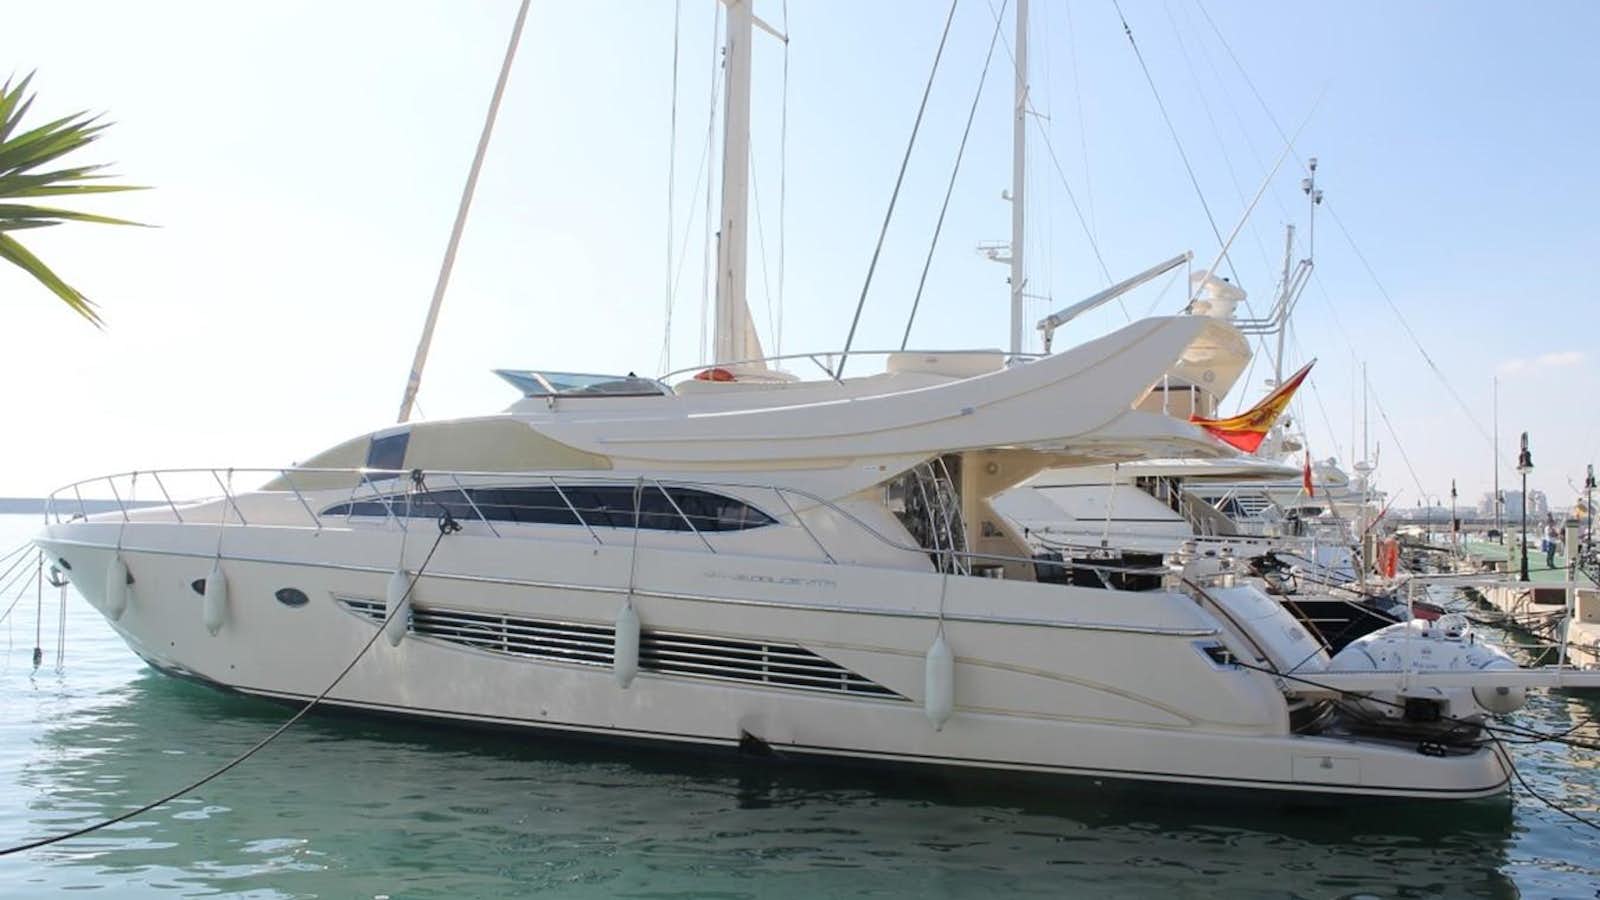 Macami
Yacht for Sale